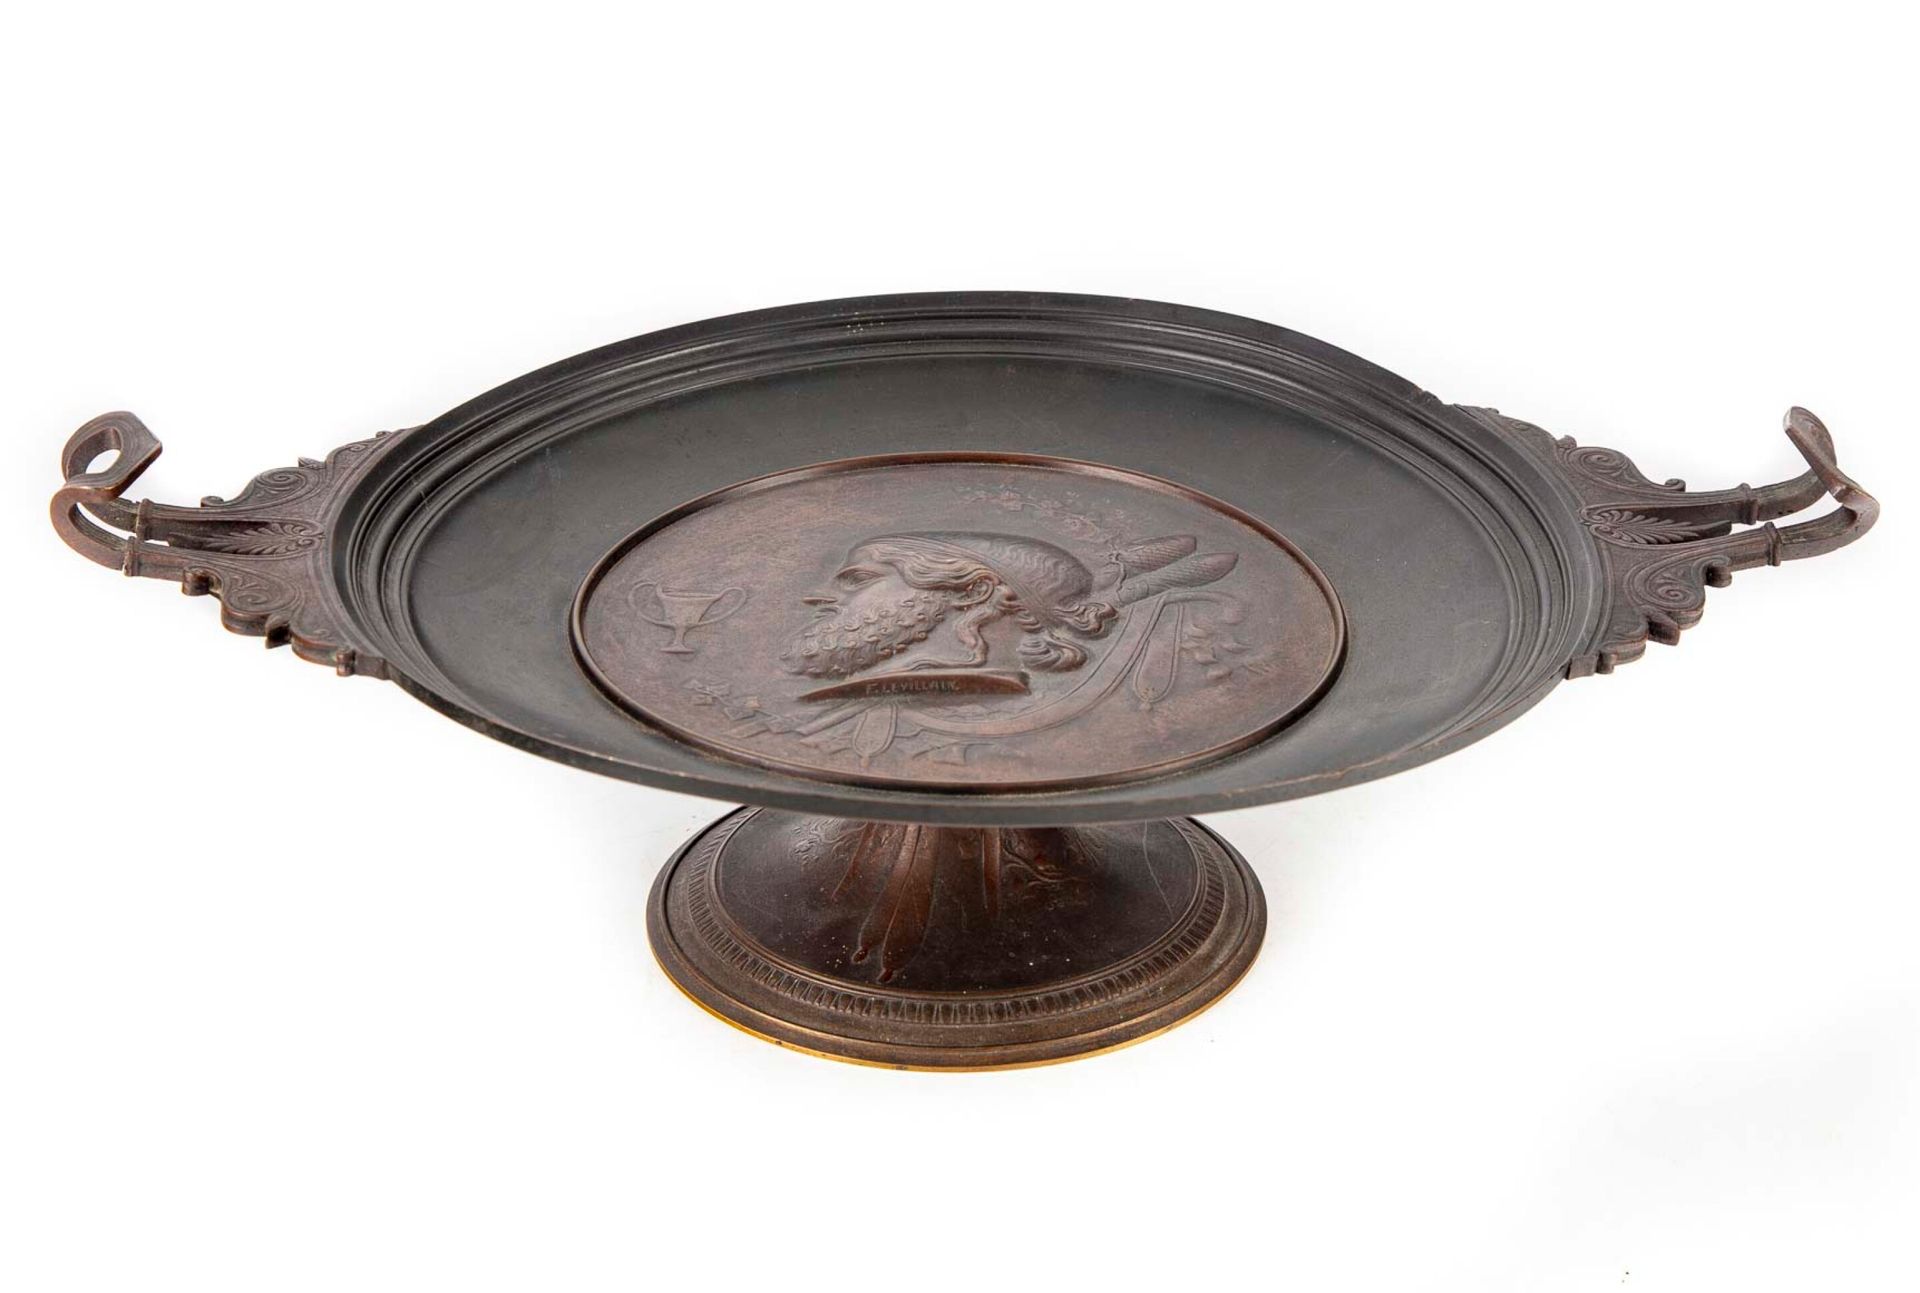 LEVILLAIN Ferdinand LEVILLAIN (1837-1905)

Copa de bronce decorada con un perfil&hellip;